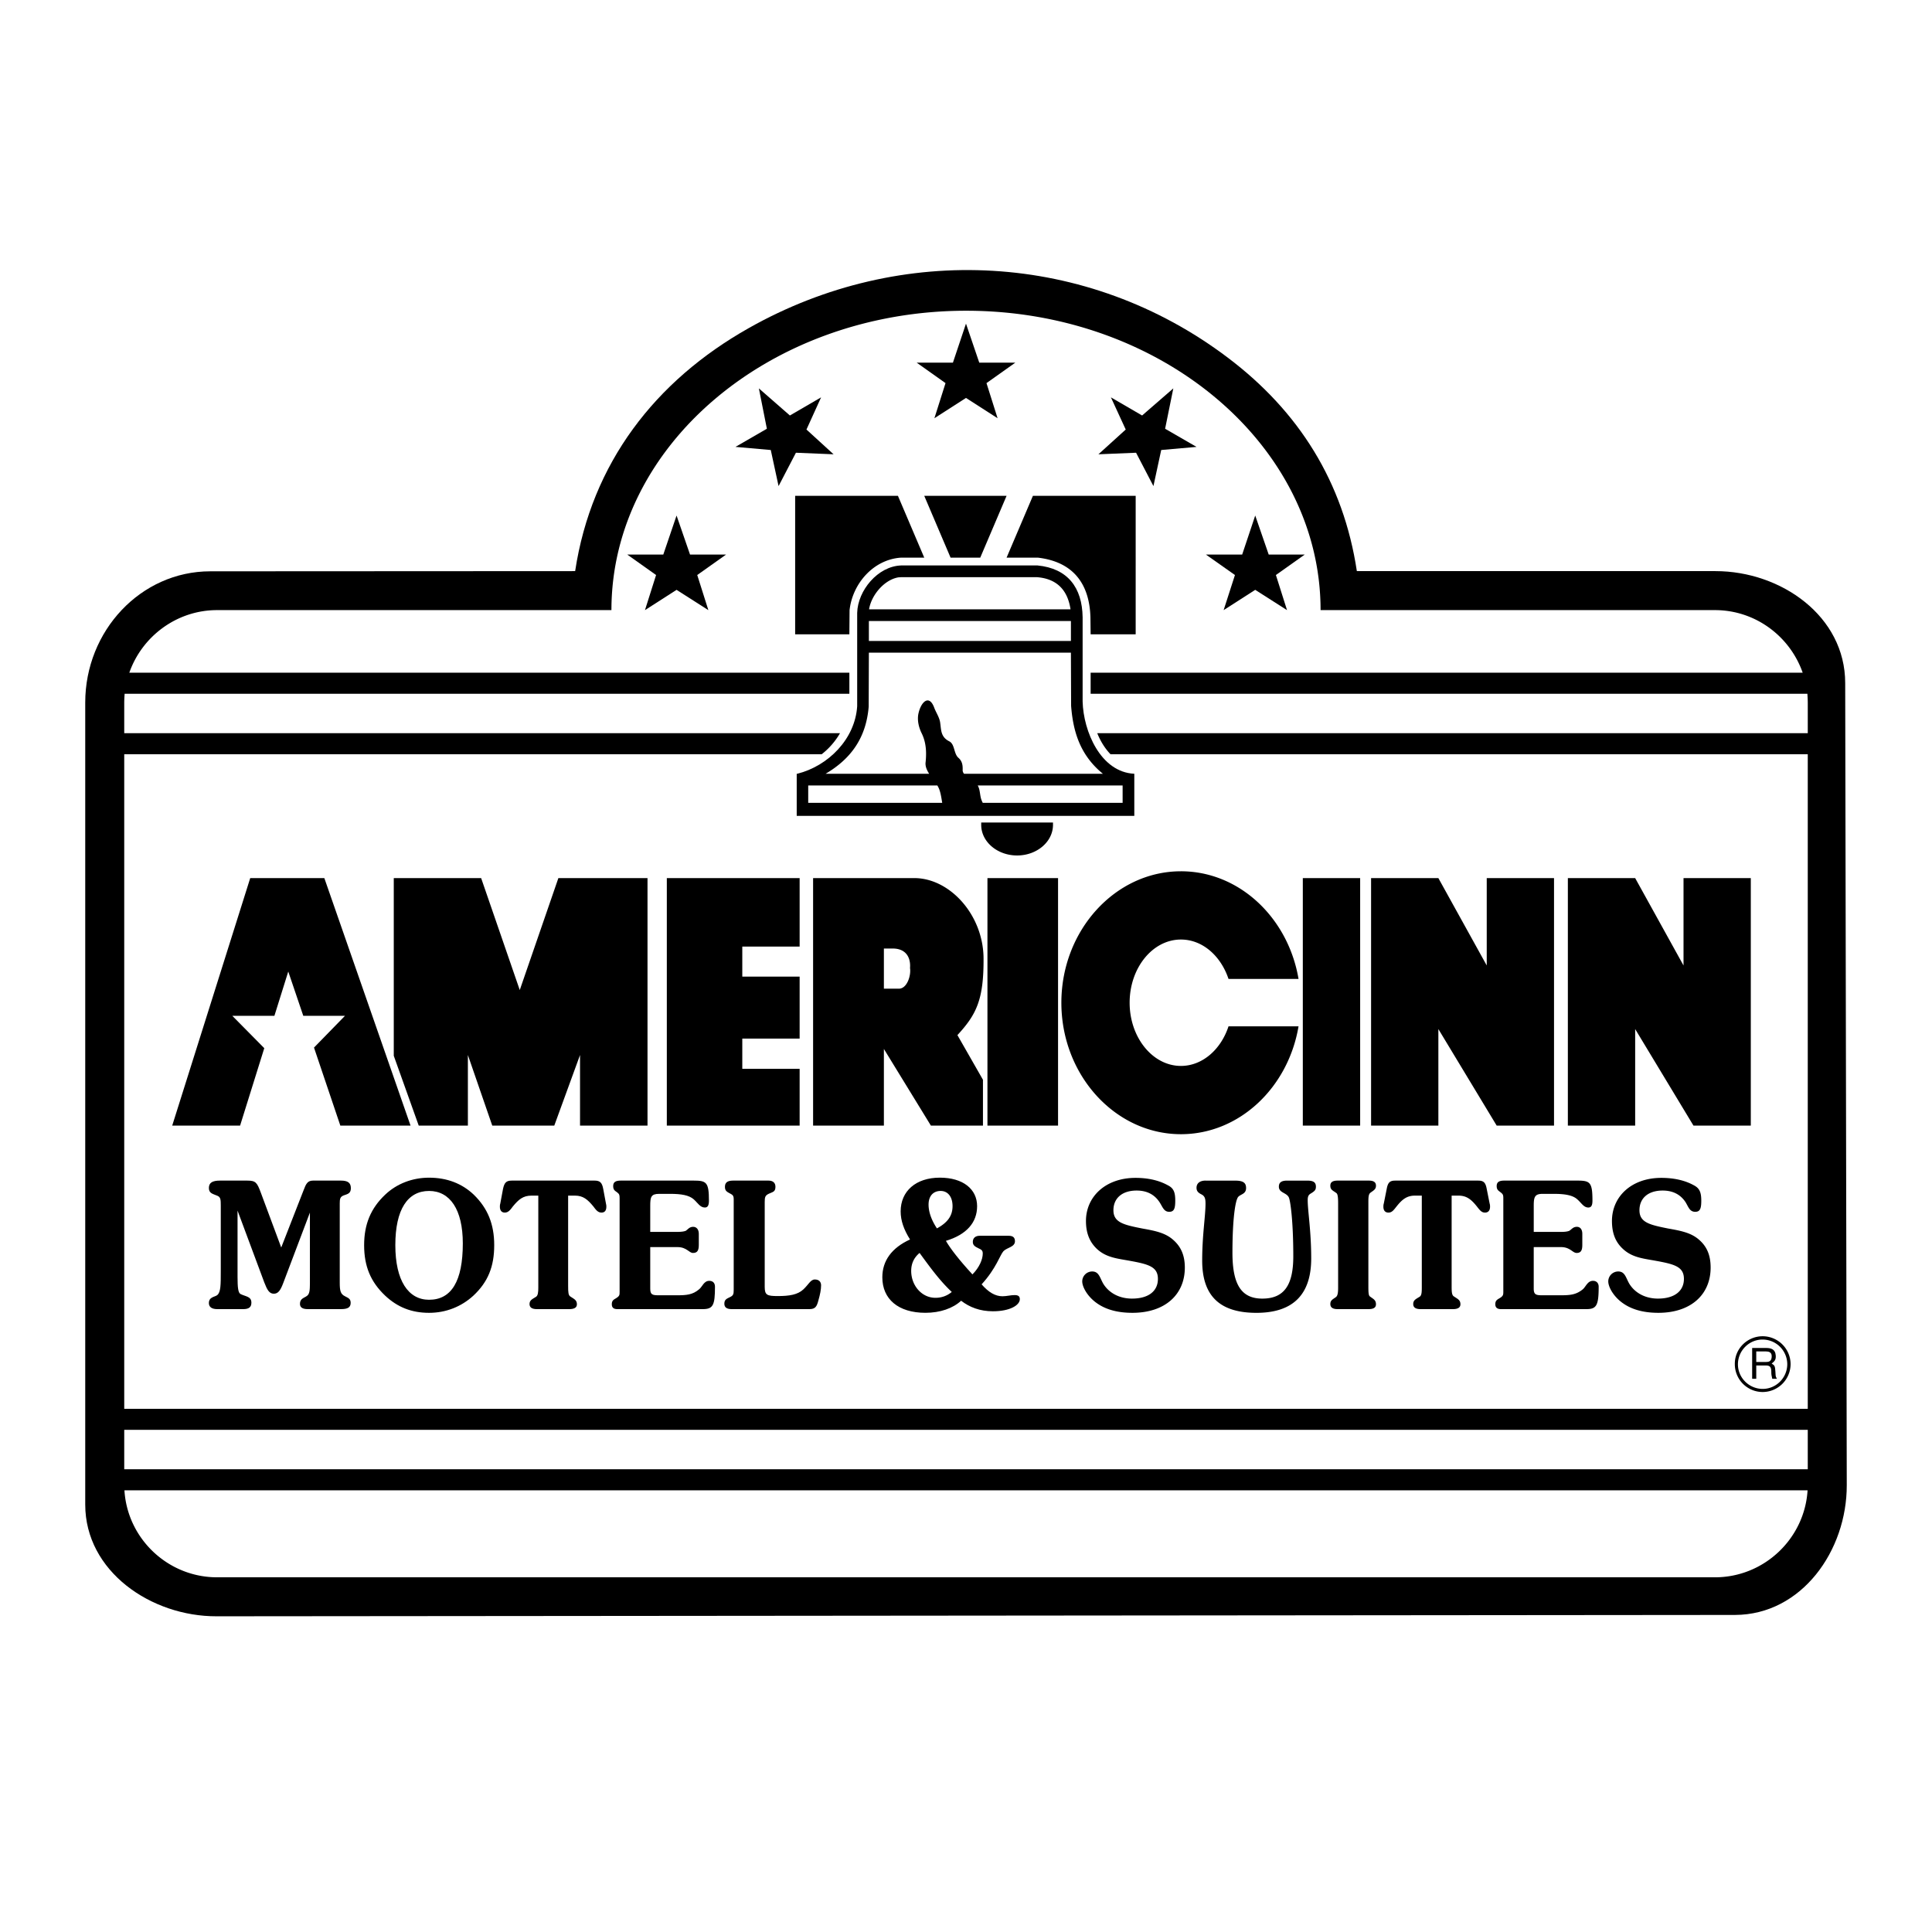 AmericInn logo colors